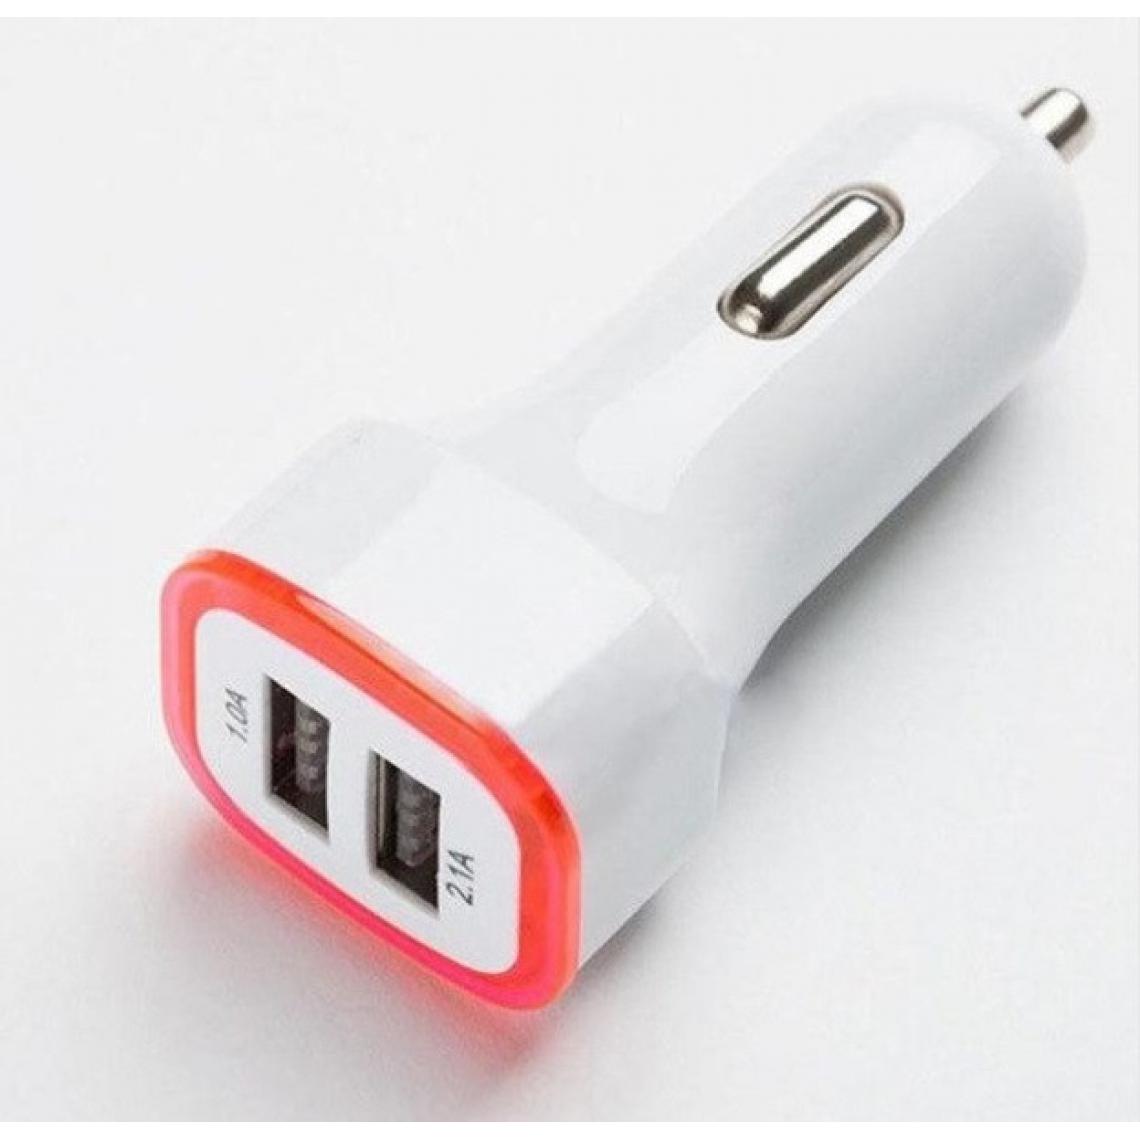 Shot - Double Adaptateur LED Prise Allume Cigare USB pour "WIKO Y81" Smartphone Double 2 Ports Voiture Chargeur Univers (ORANGE) - Chargeur Voiture 12V